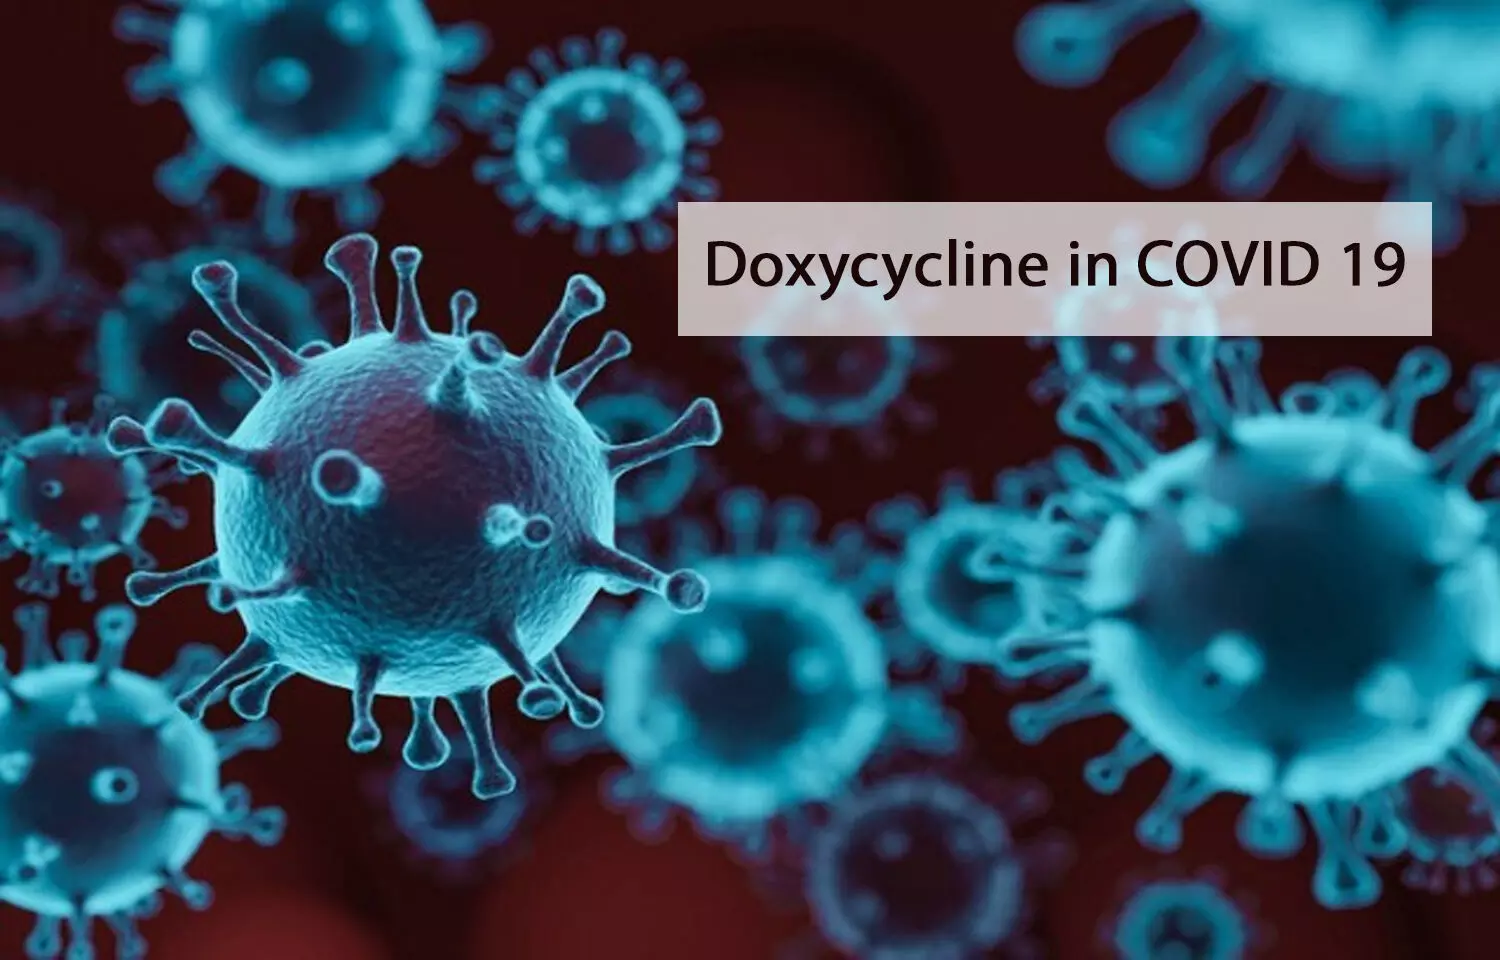 Doxycycline and Lopinavir - Novel way of Managing COVID-19